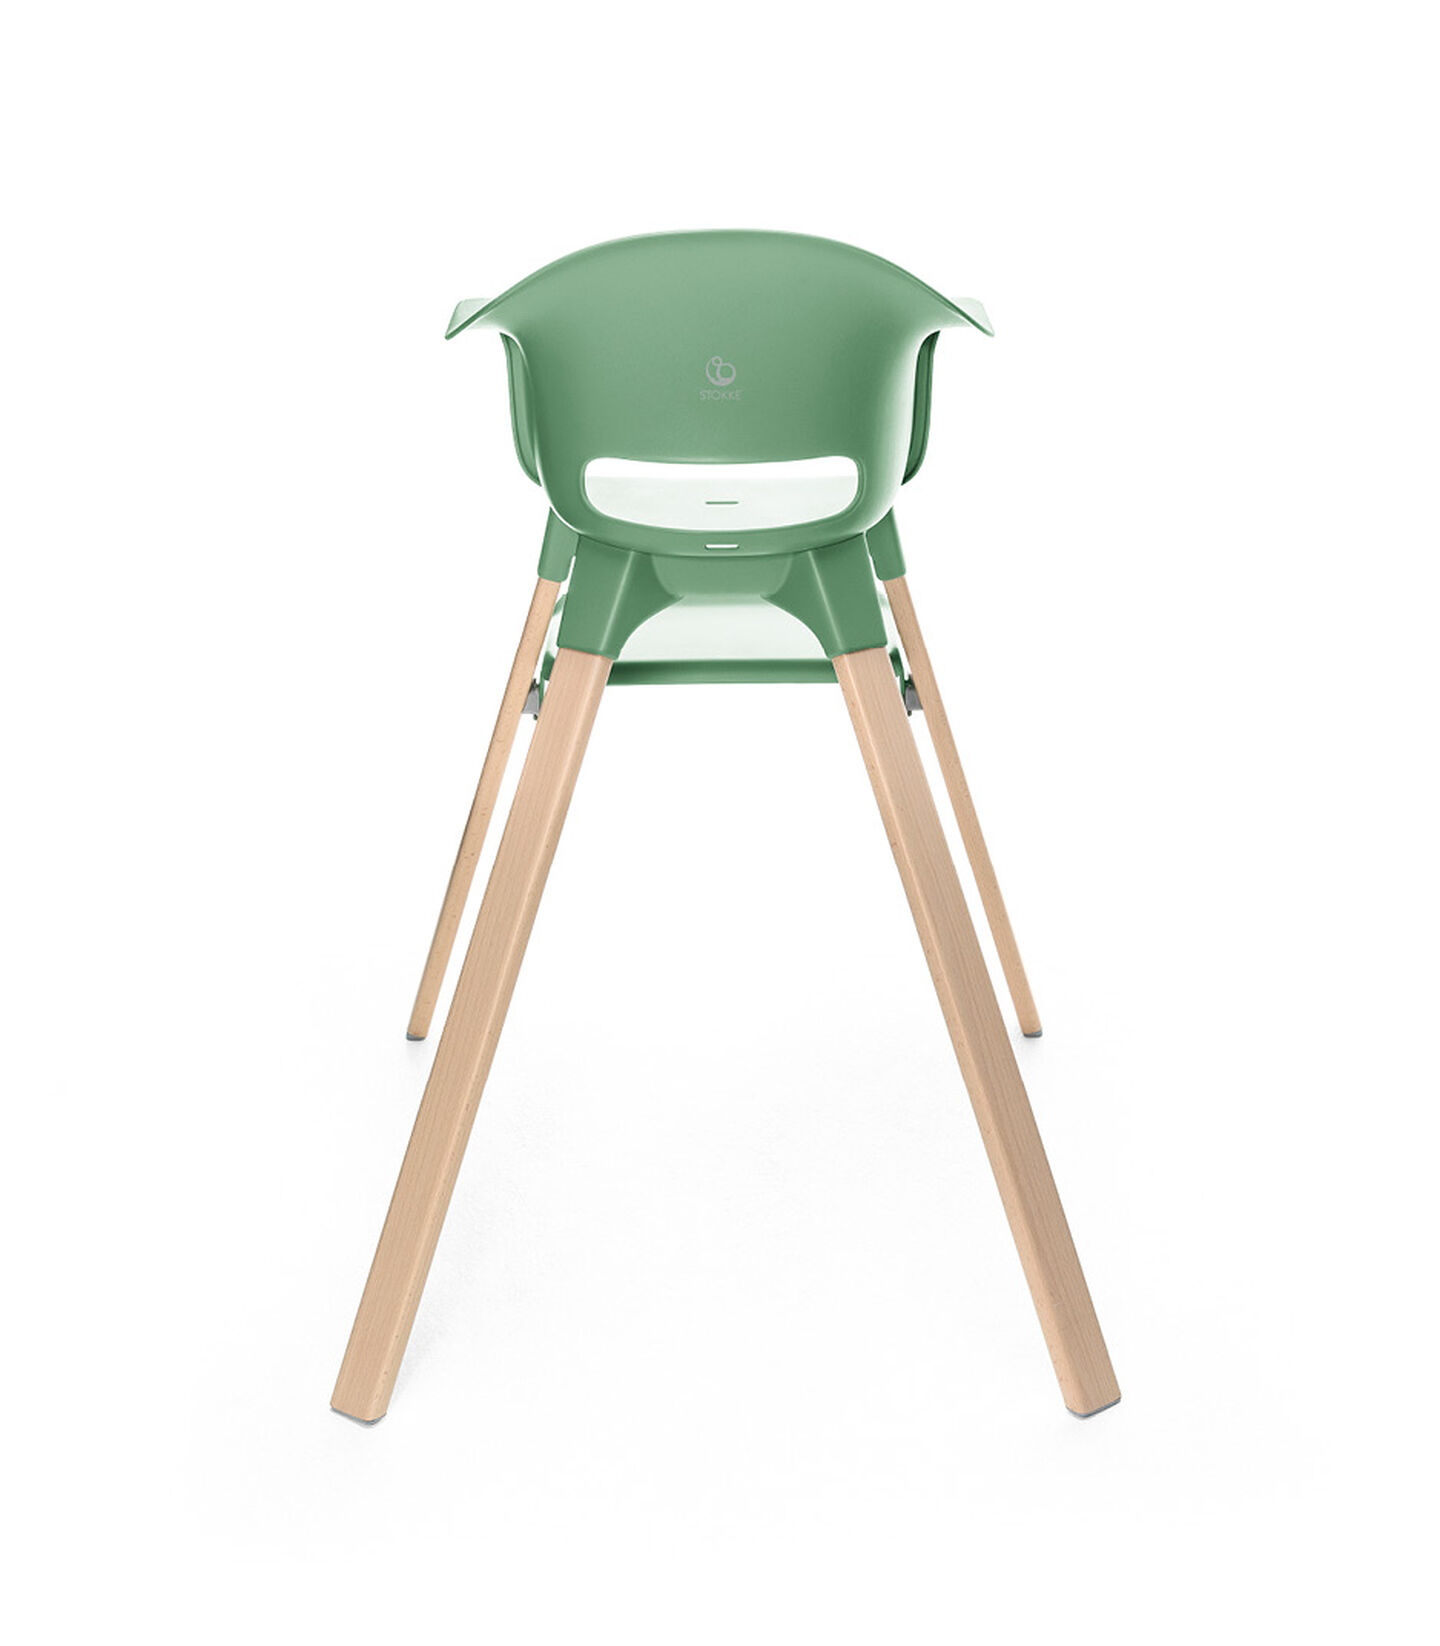 Stokke® Clikk™ High Chair Soft Green, Clover Green, mainview view 4